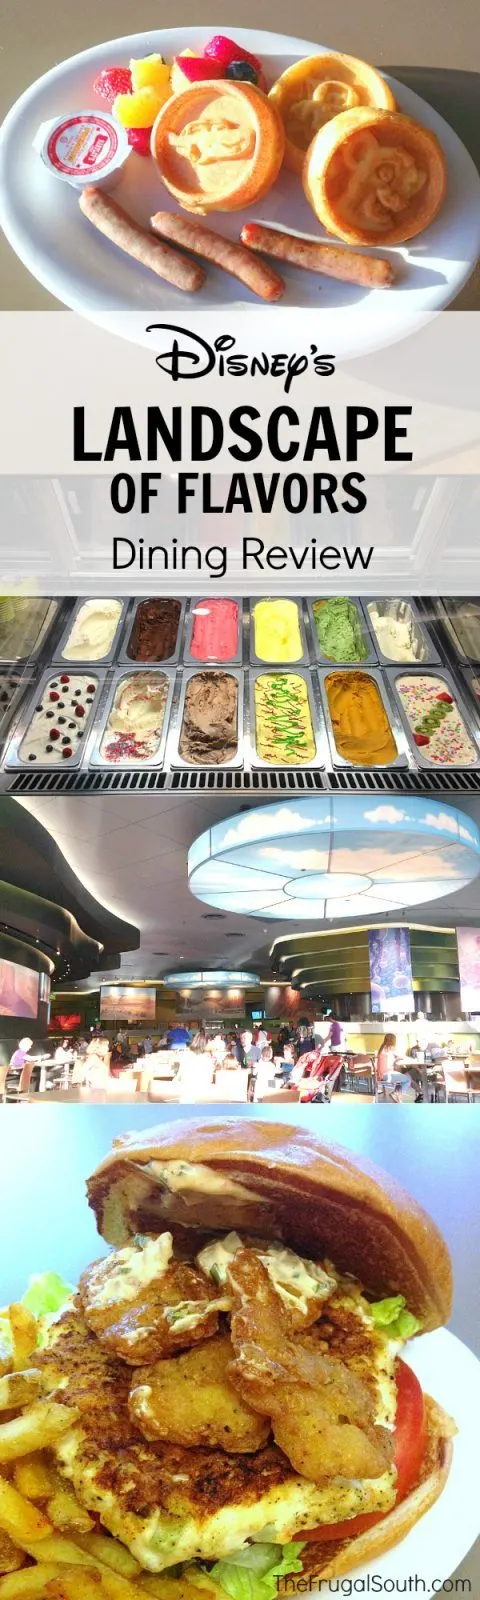 Disney's Landscape of Flavors Dining Review Pinterest Image